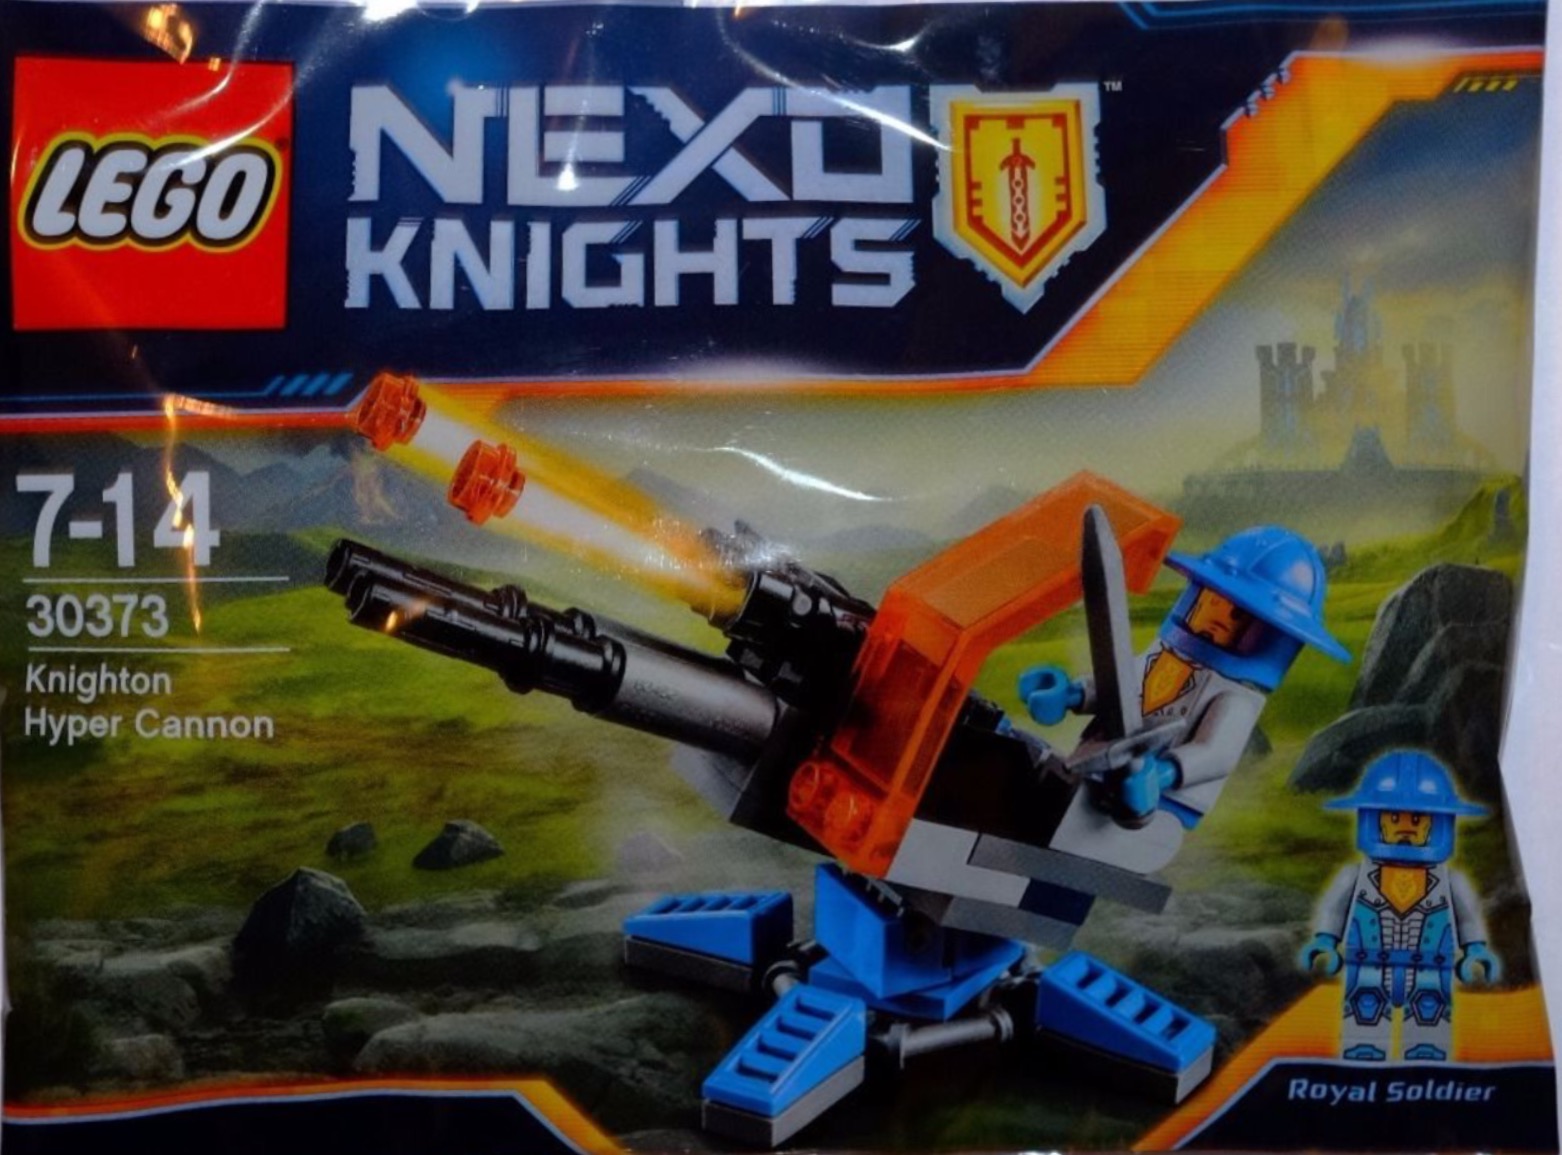 Lego NEXO KNIGHTS 30373 Knighton Hyper Cannon 